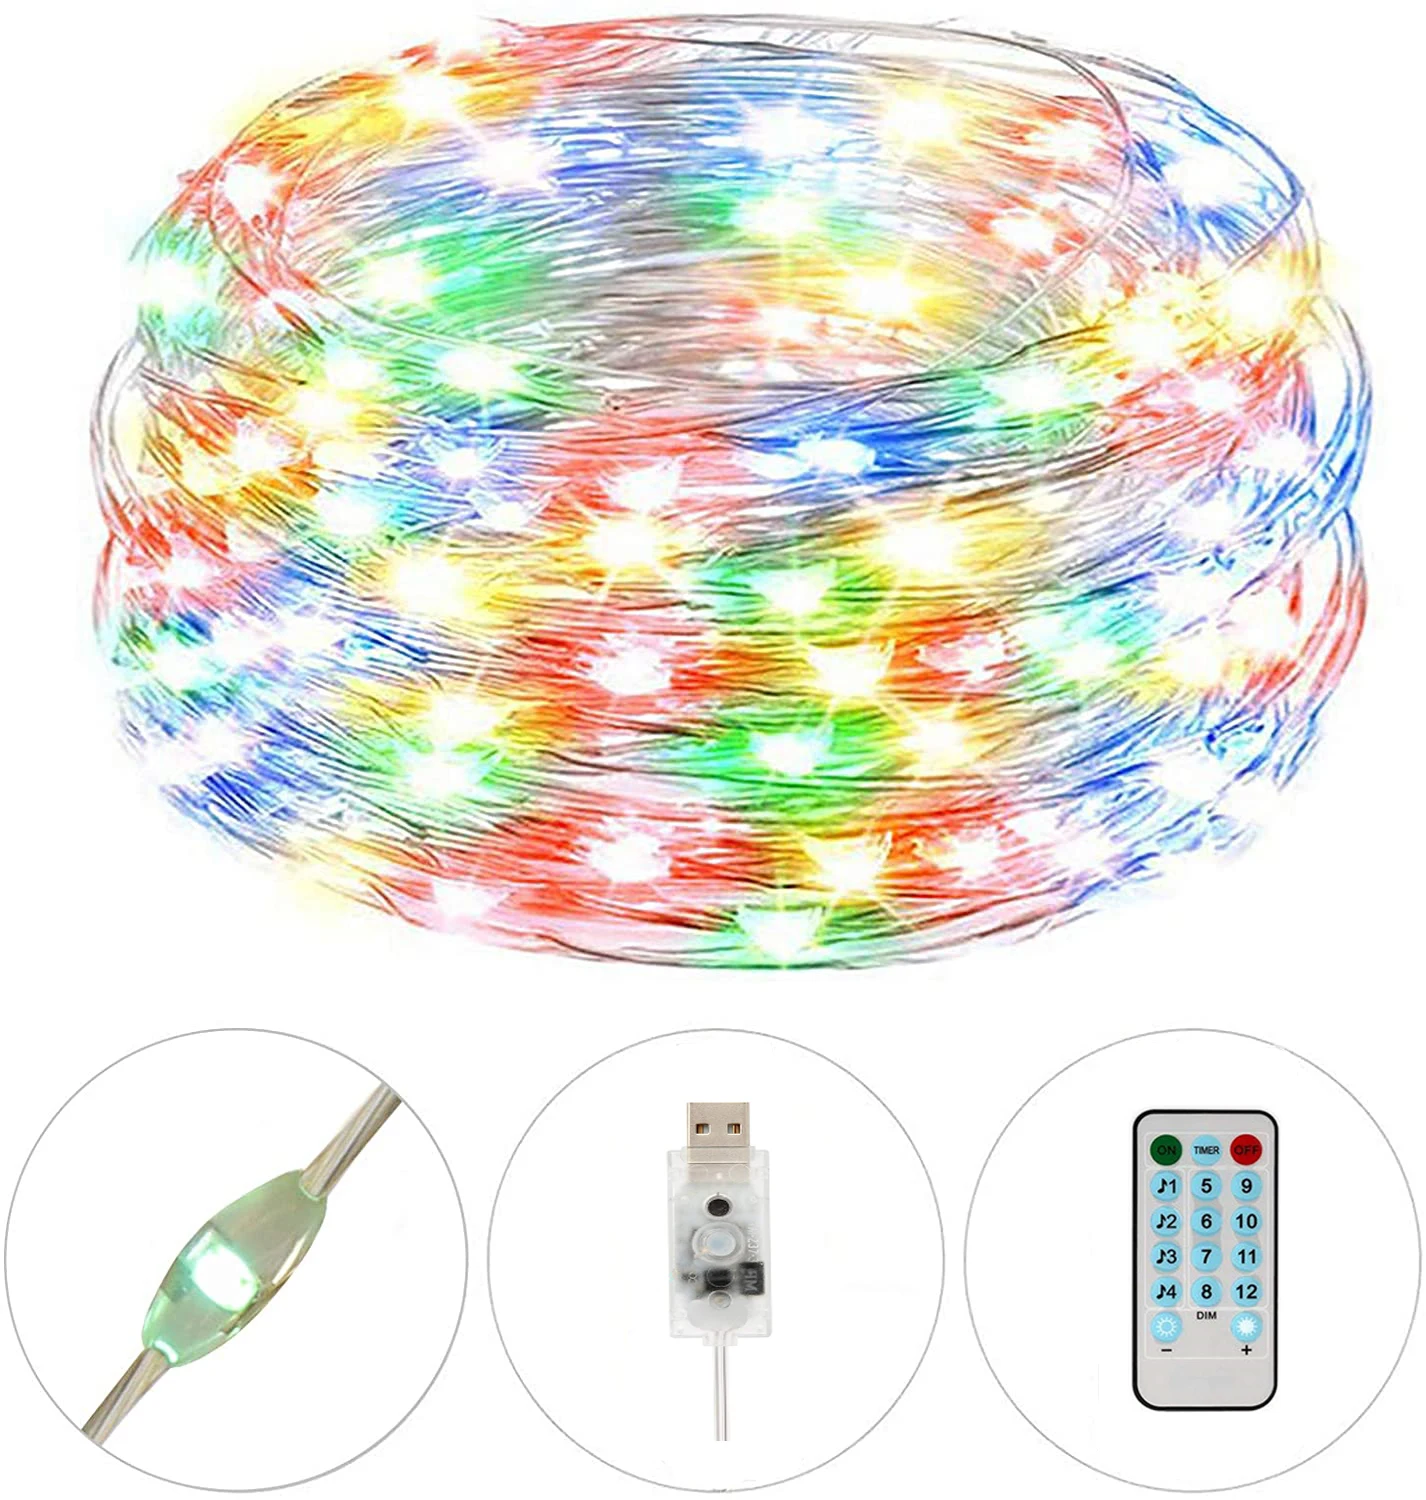 LED lights remote control home party lights USB plug birthday Christmas tree decorative music fun KTV Christmas decorative gifts